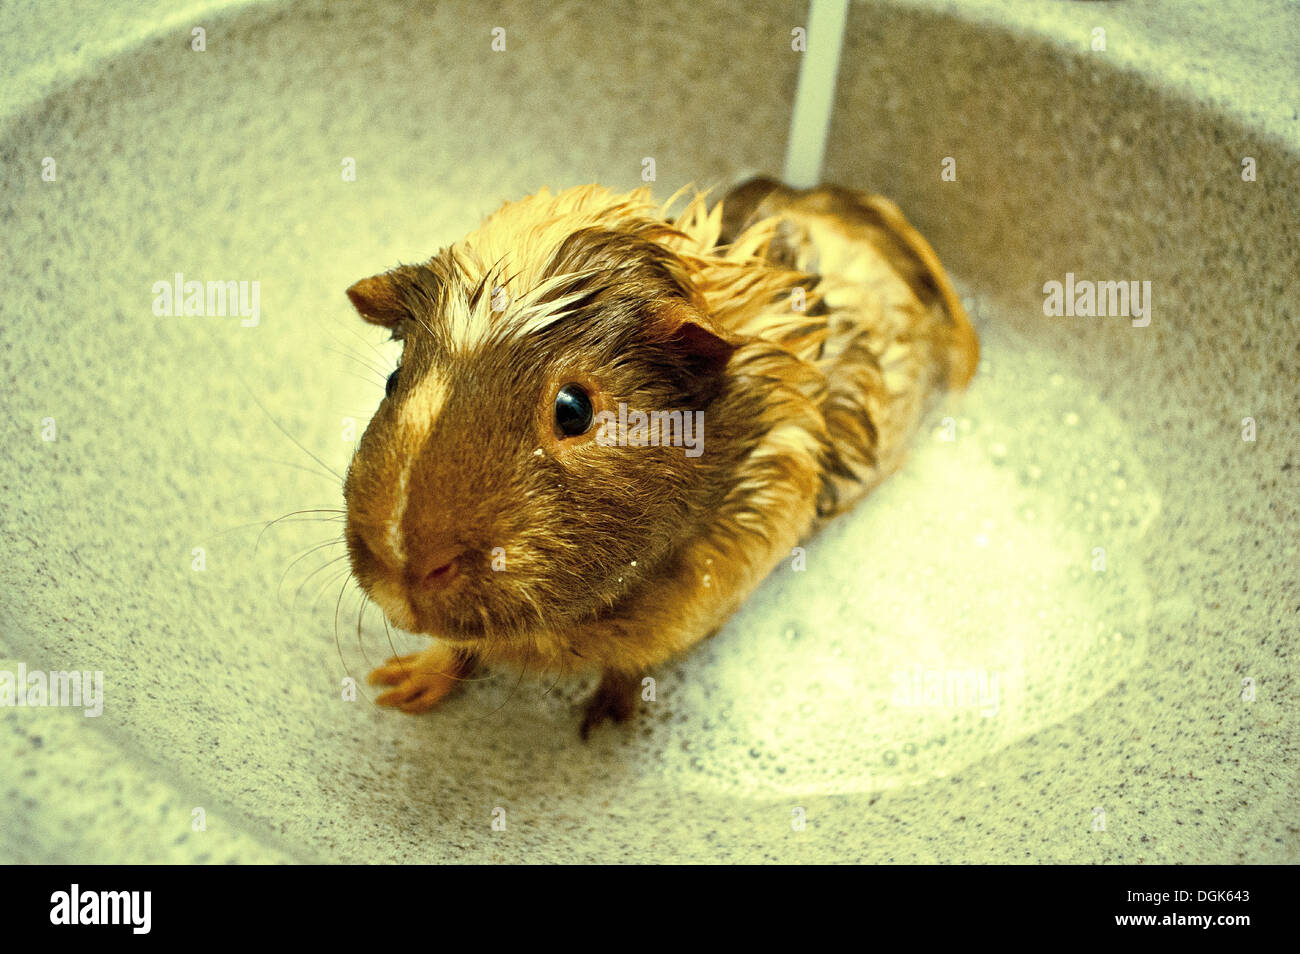 Guinea pig en el fregadero. Foto de stock